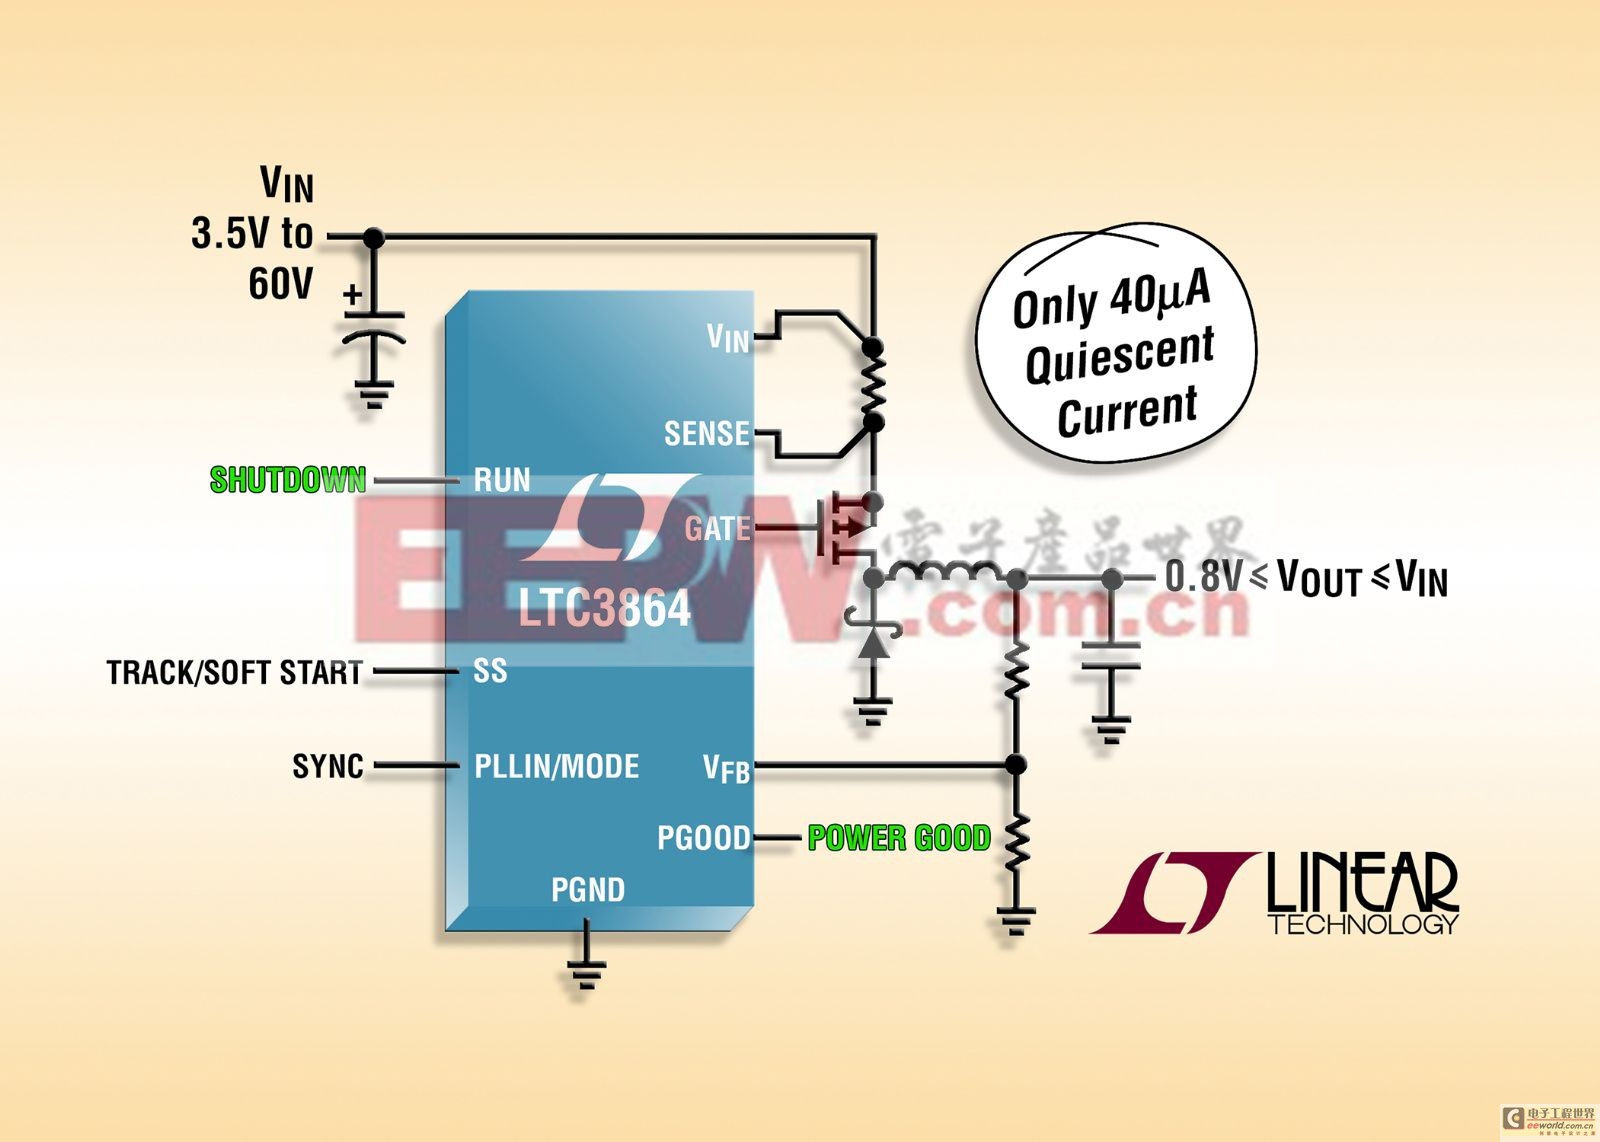 60V 输入降压型 DC/DC 控制器 在电池供电系统中仅吸取 40µA 电流 